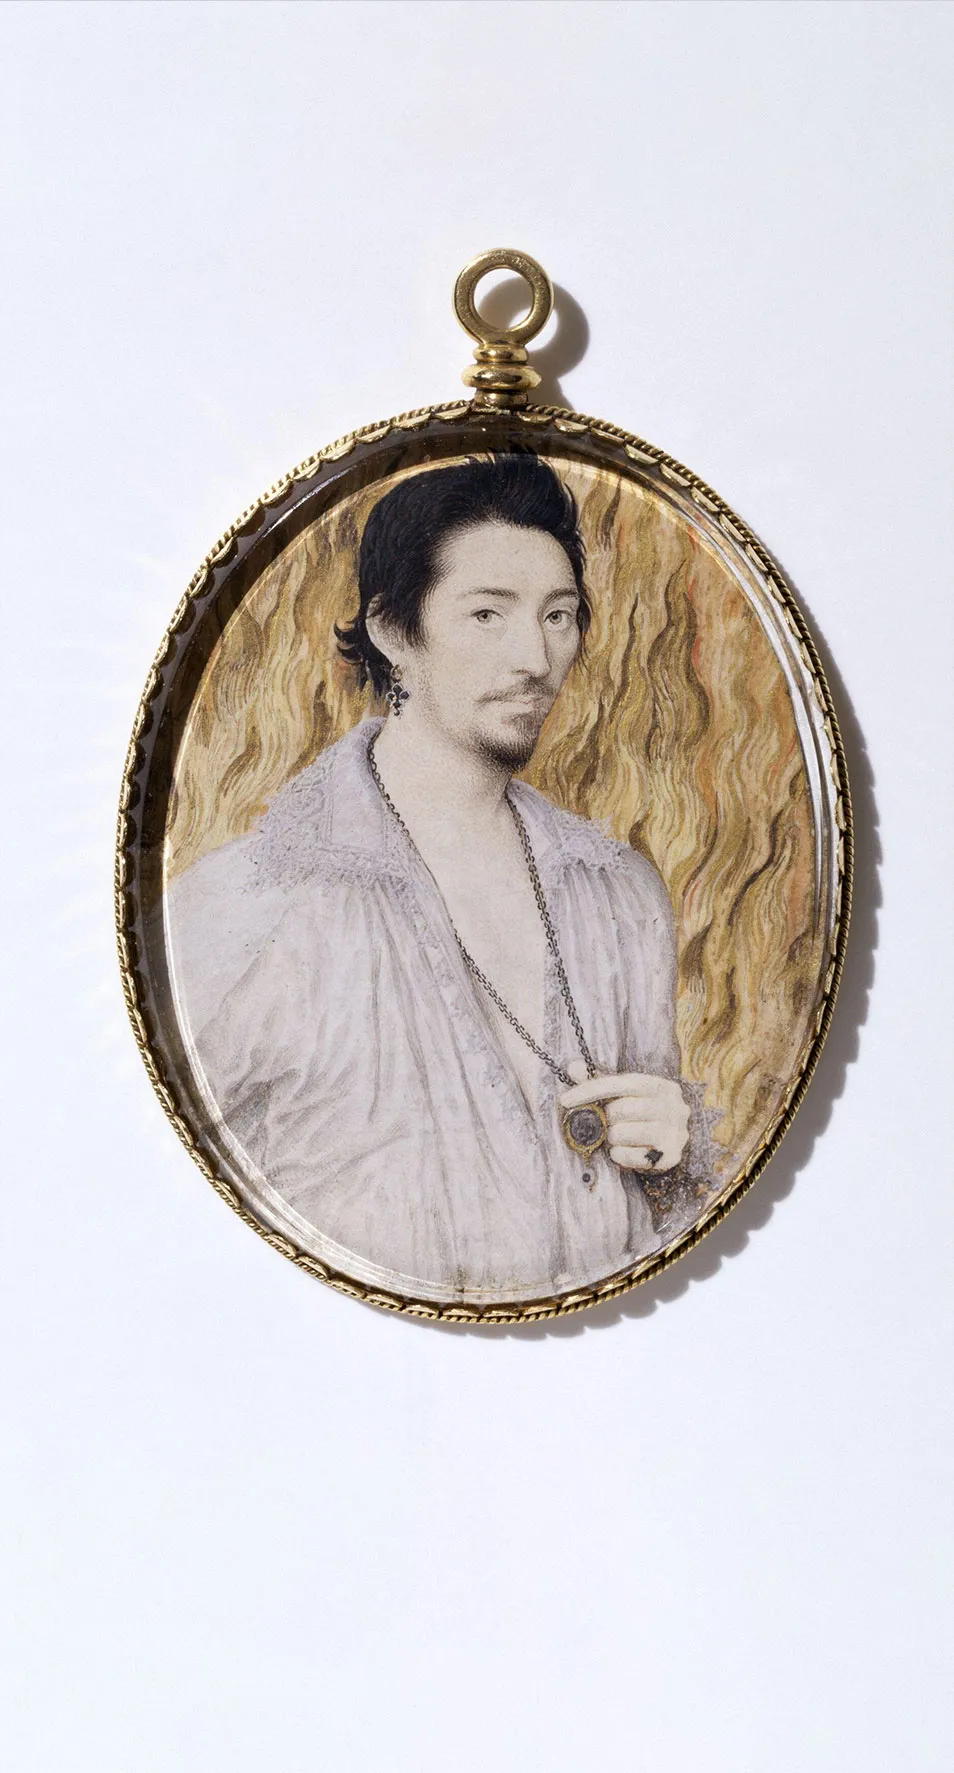 Nicholas Hilliard, Ένας άγνωστος άνθρωπος, περίπου το 1600